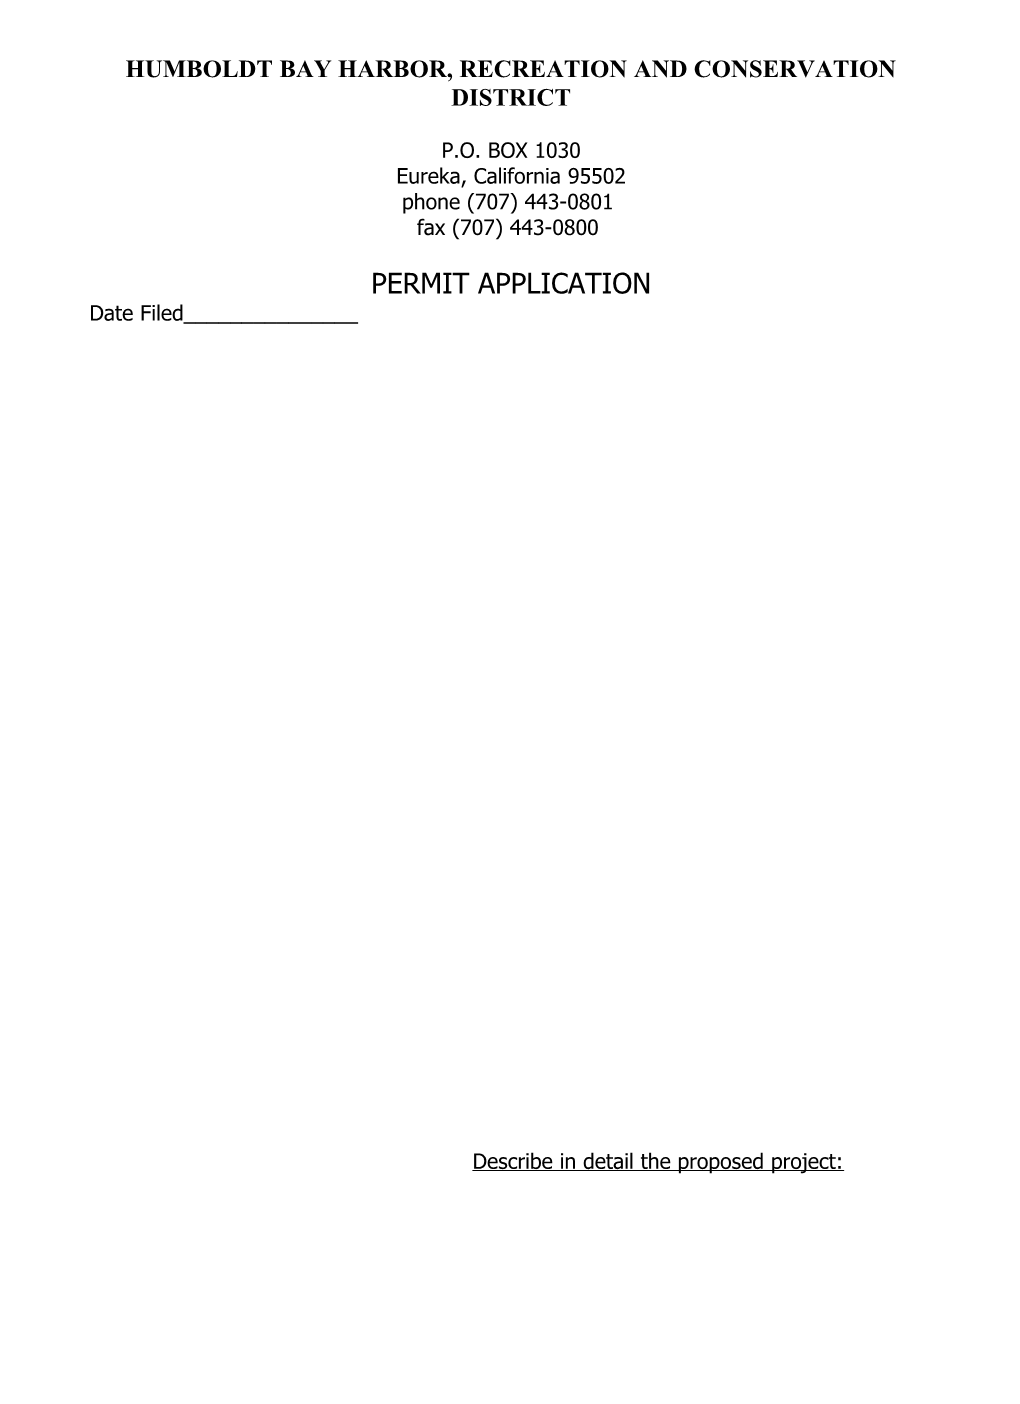 Humboldtbay Harbor District Permit Application